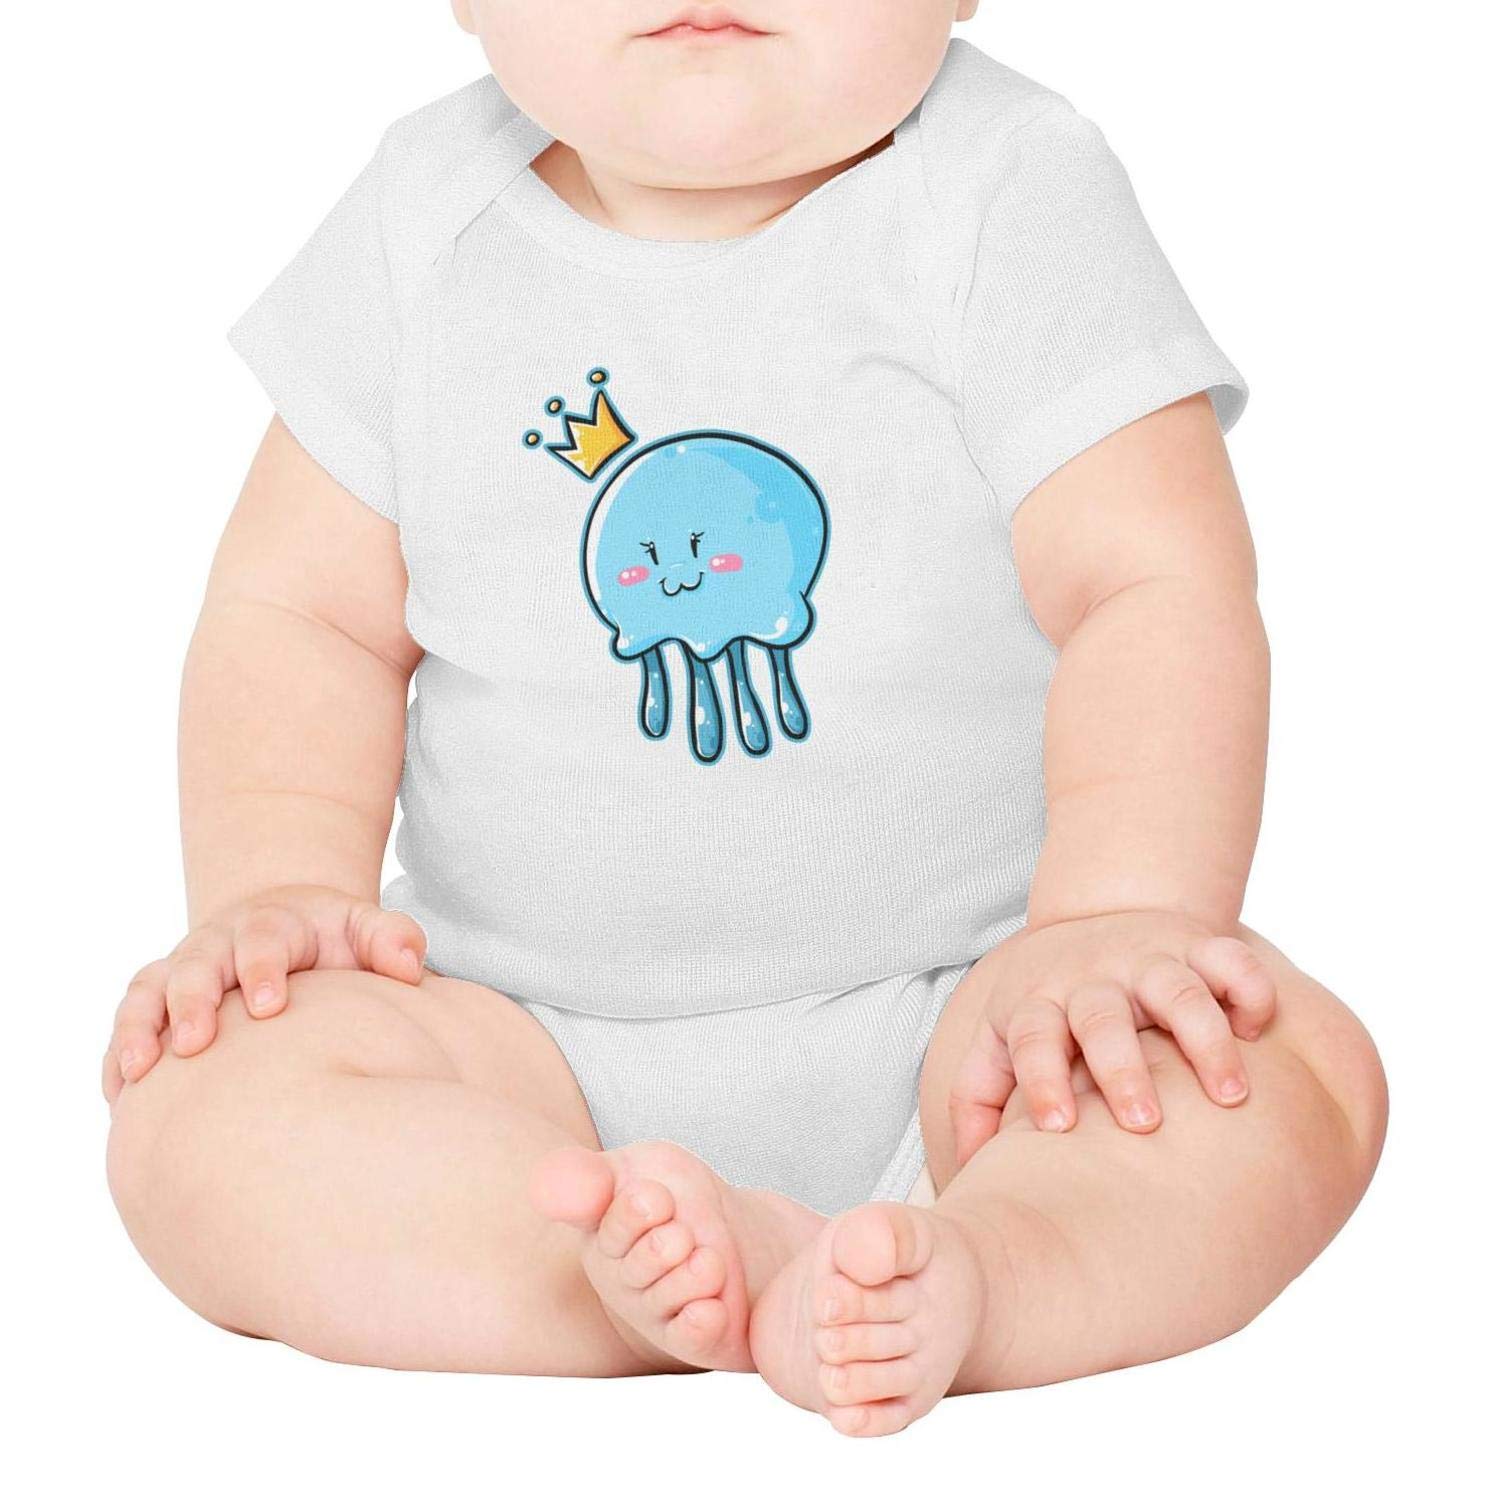 jellyfish clipart cute baby